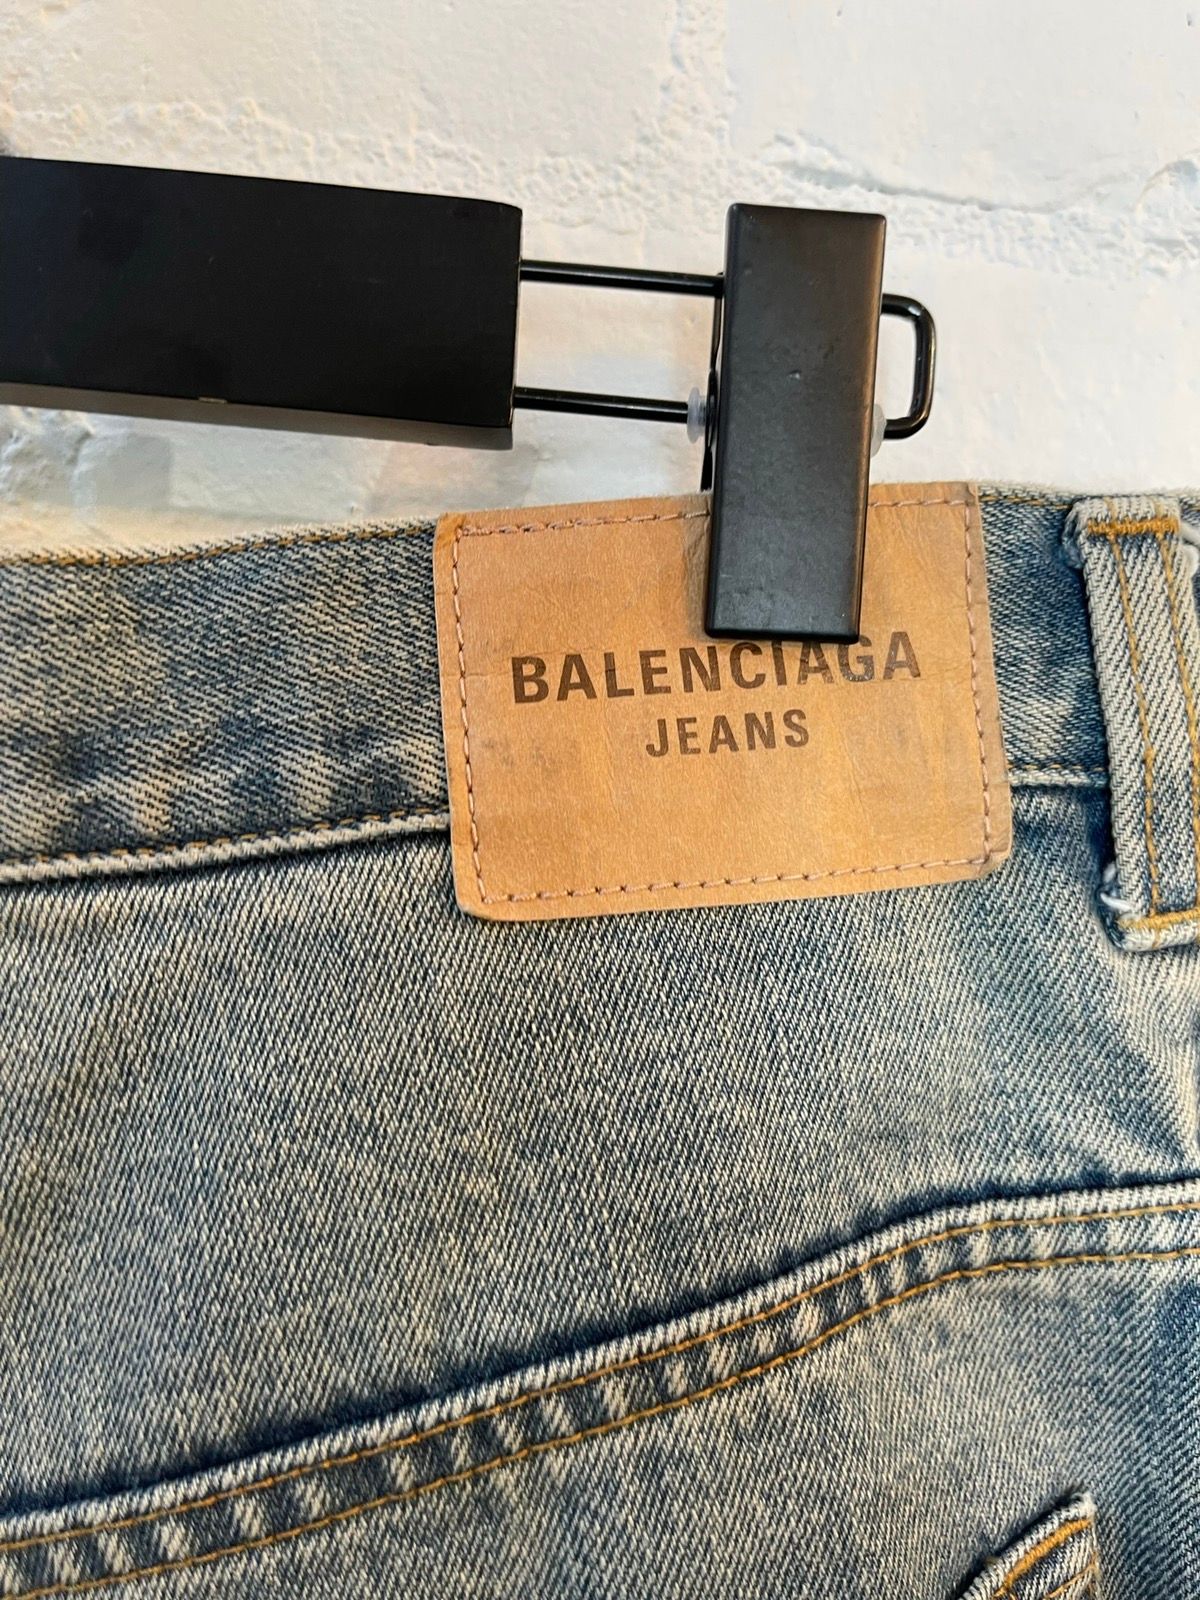 Balenciaga TORN Hole Distressed Denim Jeans SZM 30-33